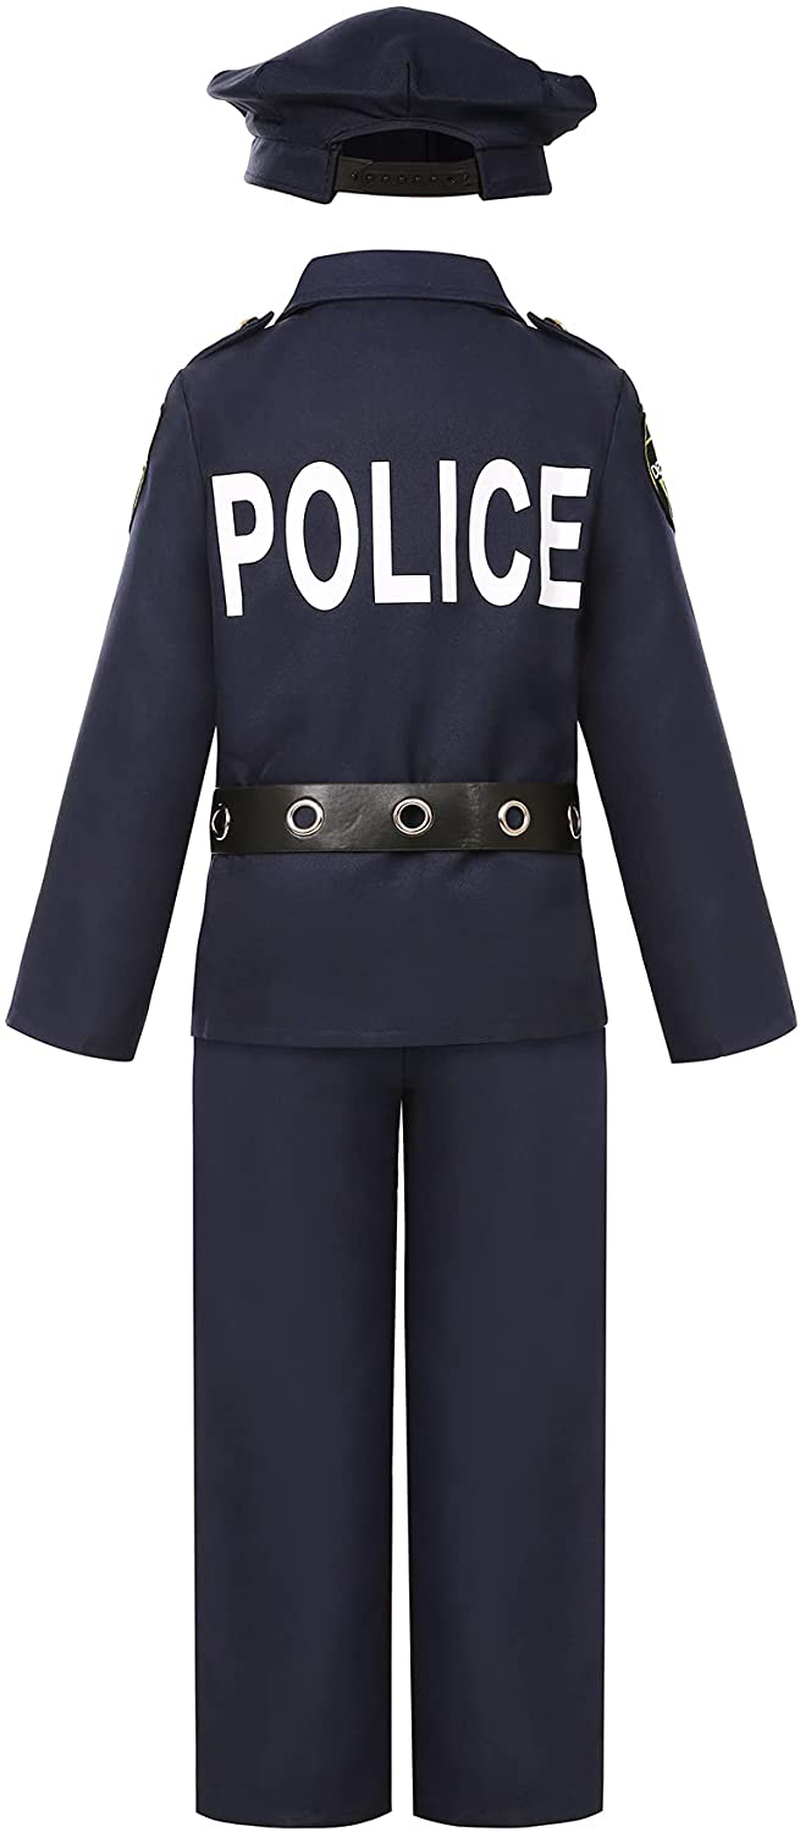 Neilyoshop Police Costume for Boys Kids Uniform Cop Costume Halloween Dress Up Costume